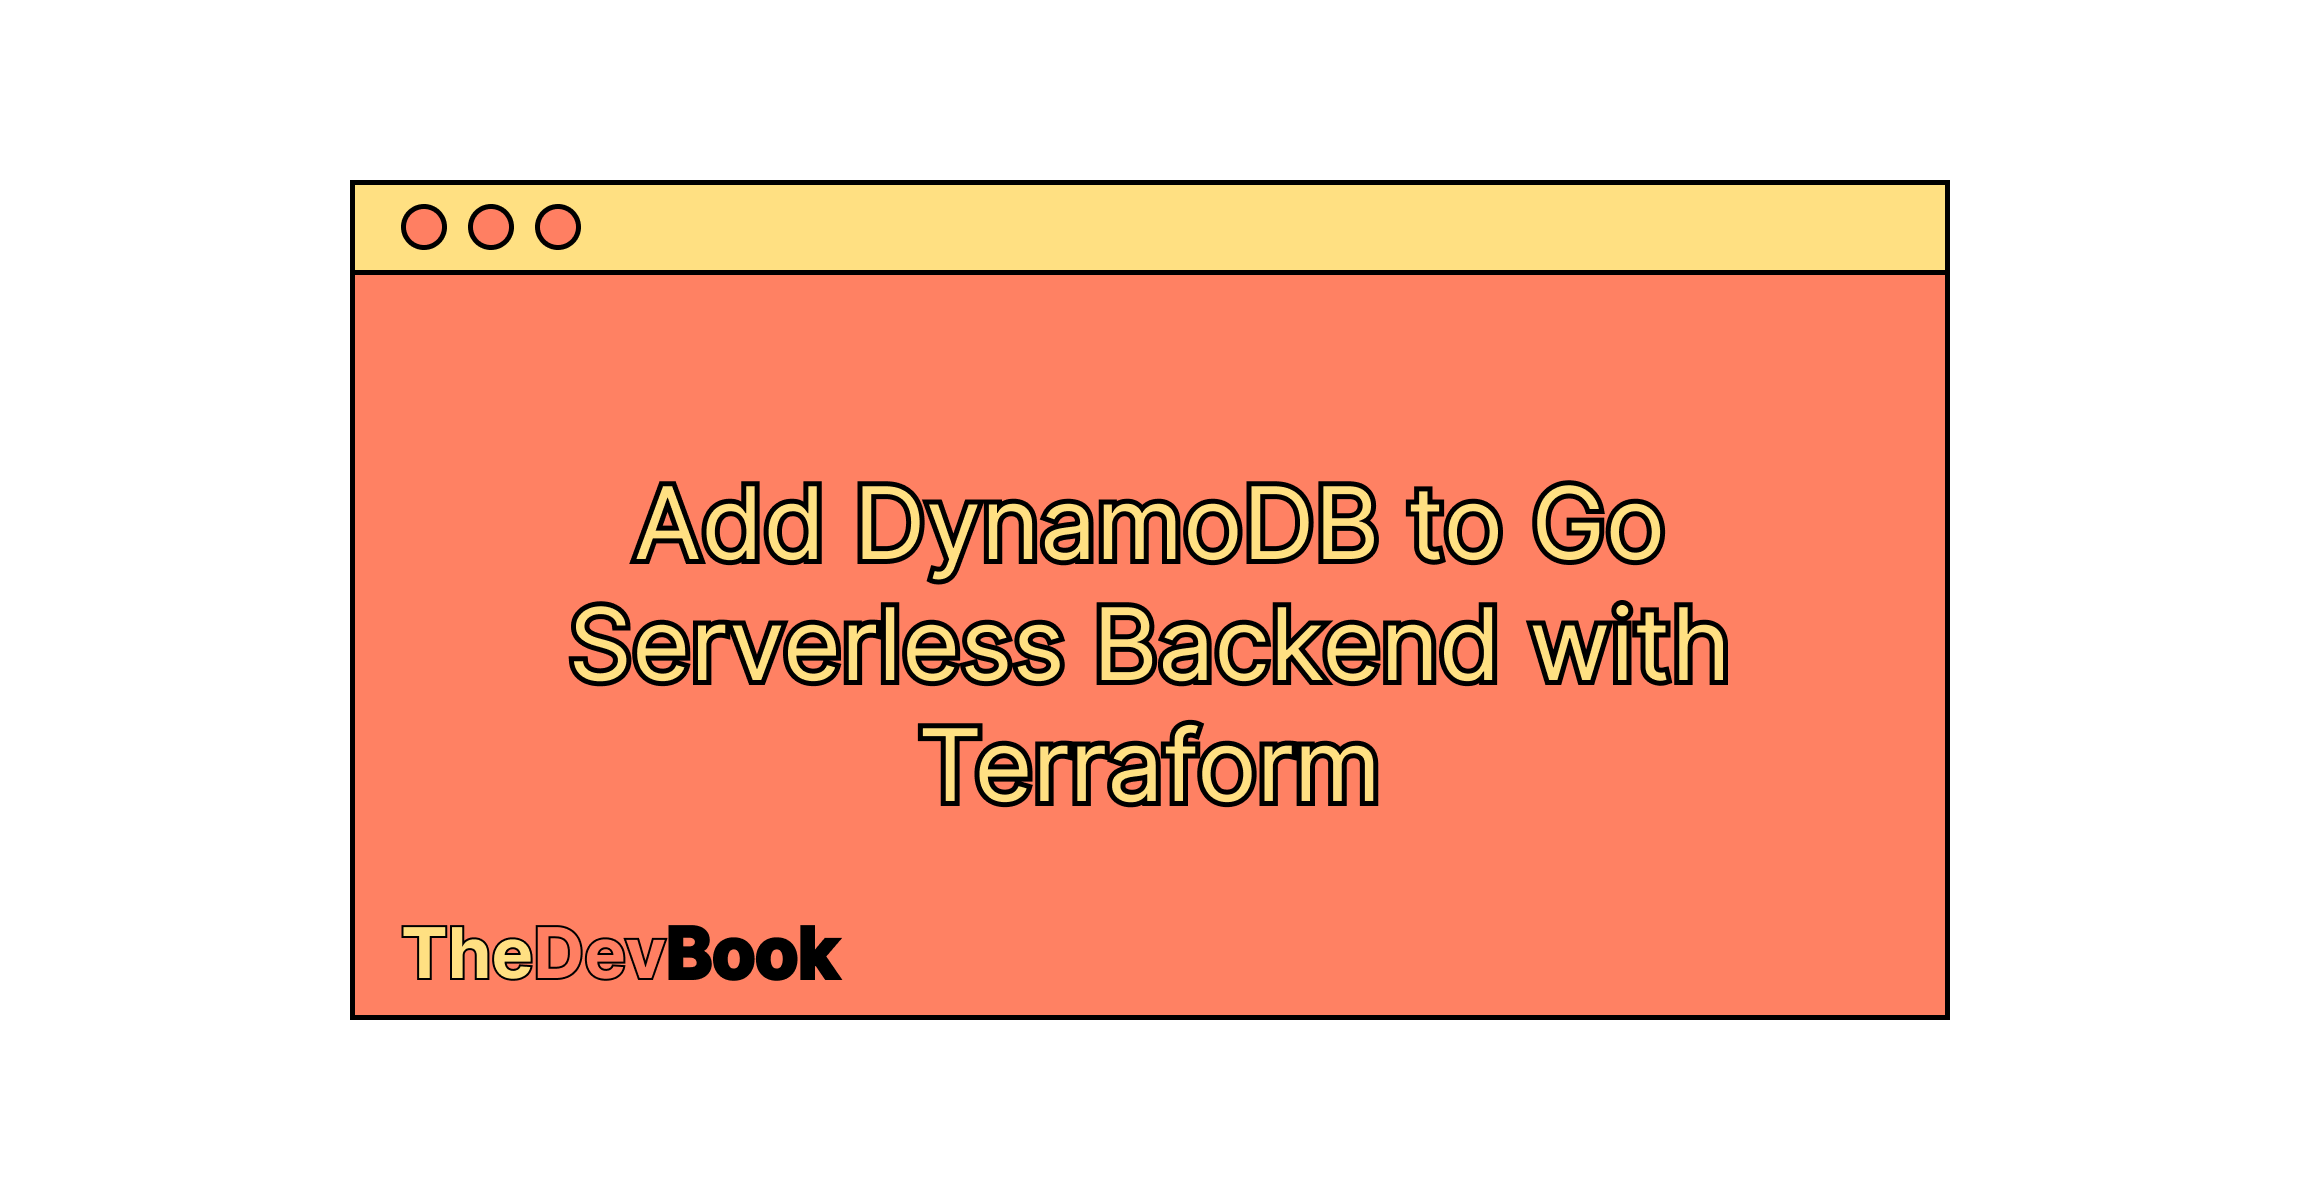 Add DynamoDB to Go Serverless Backend with Terraform